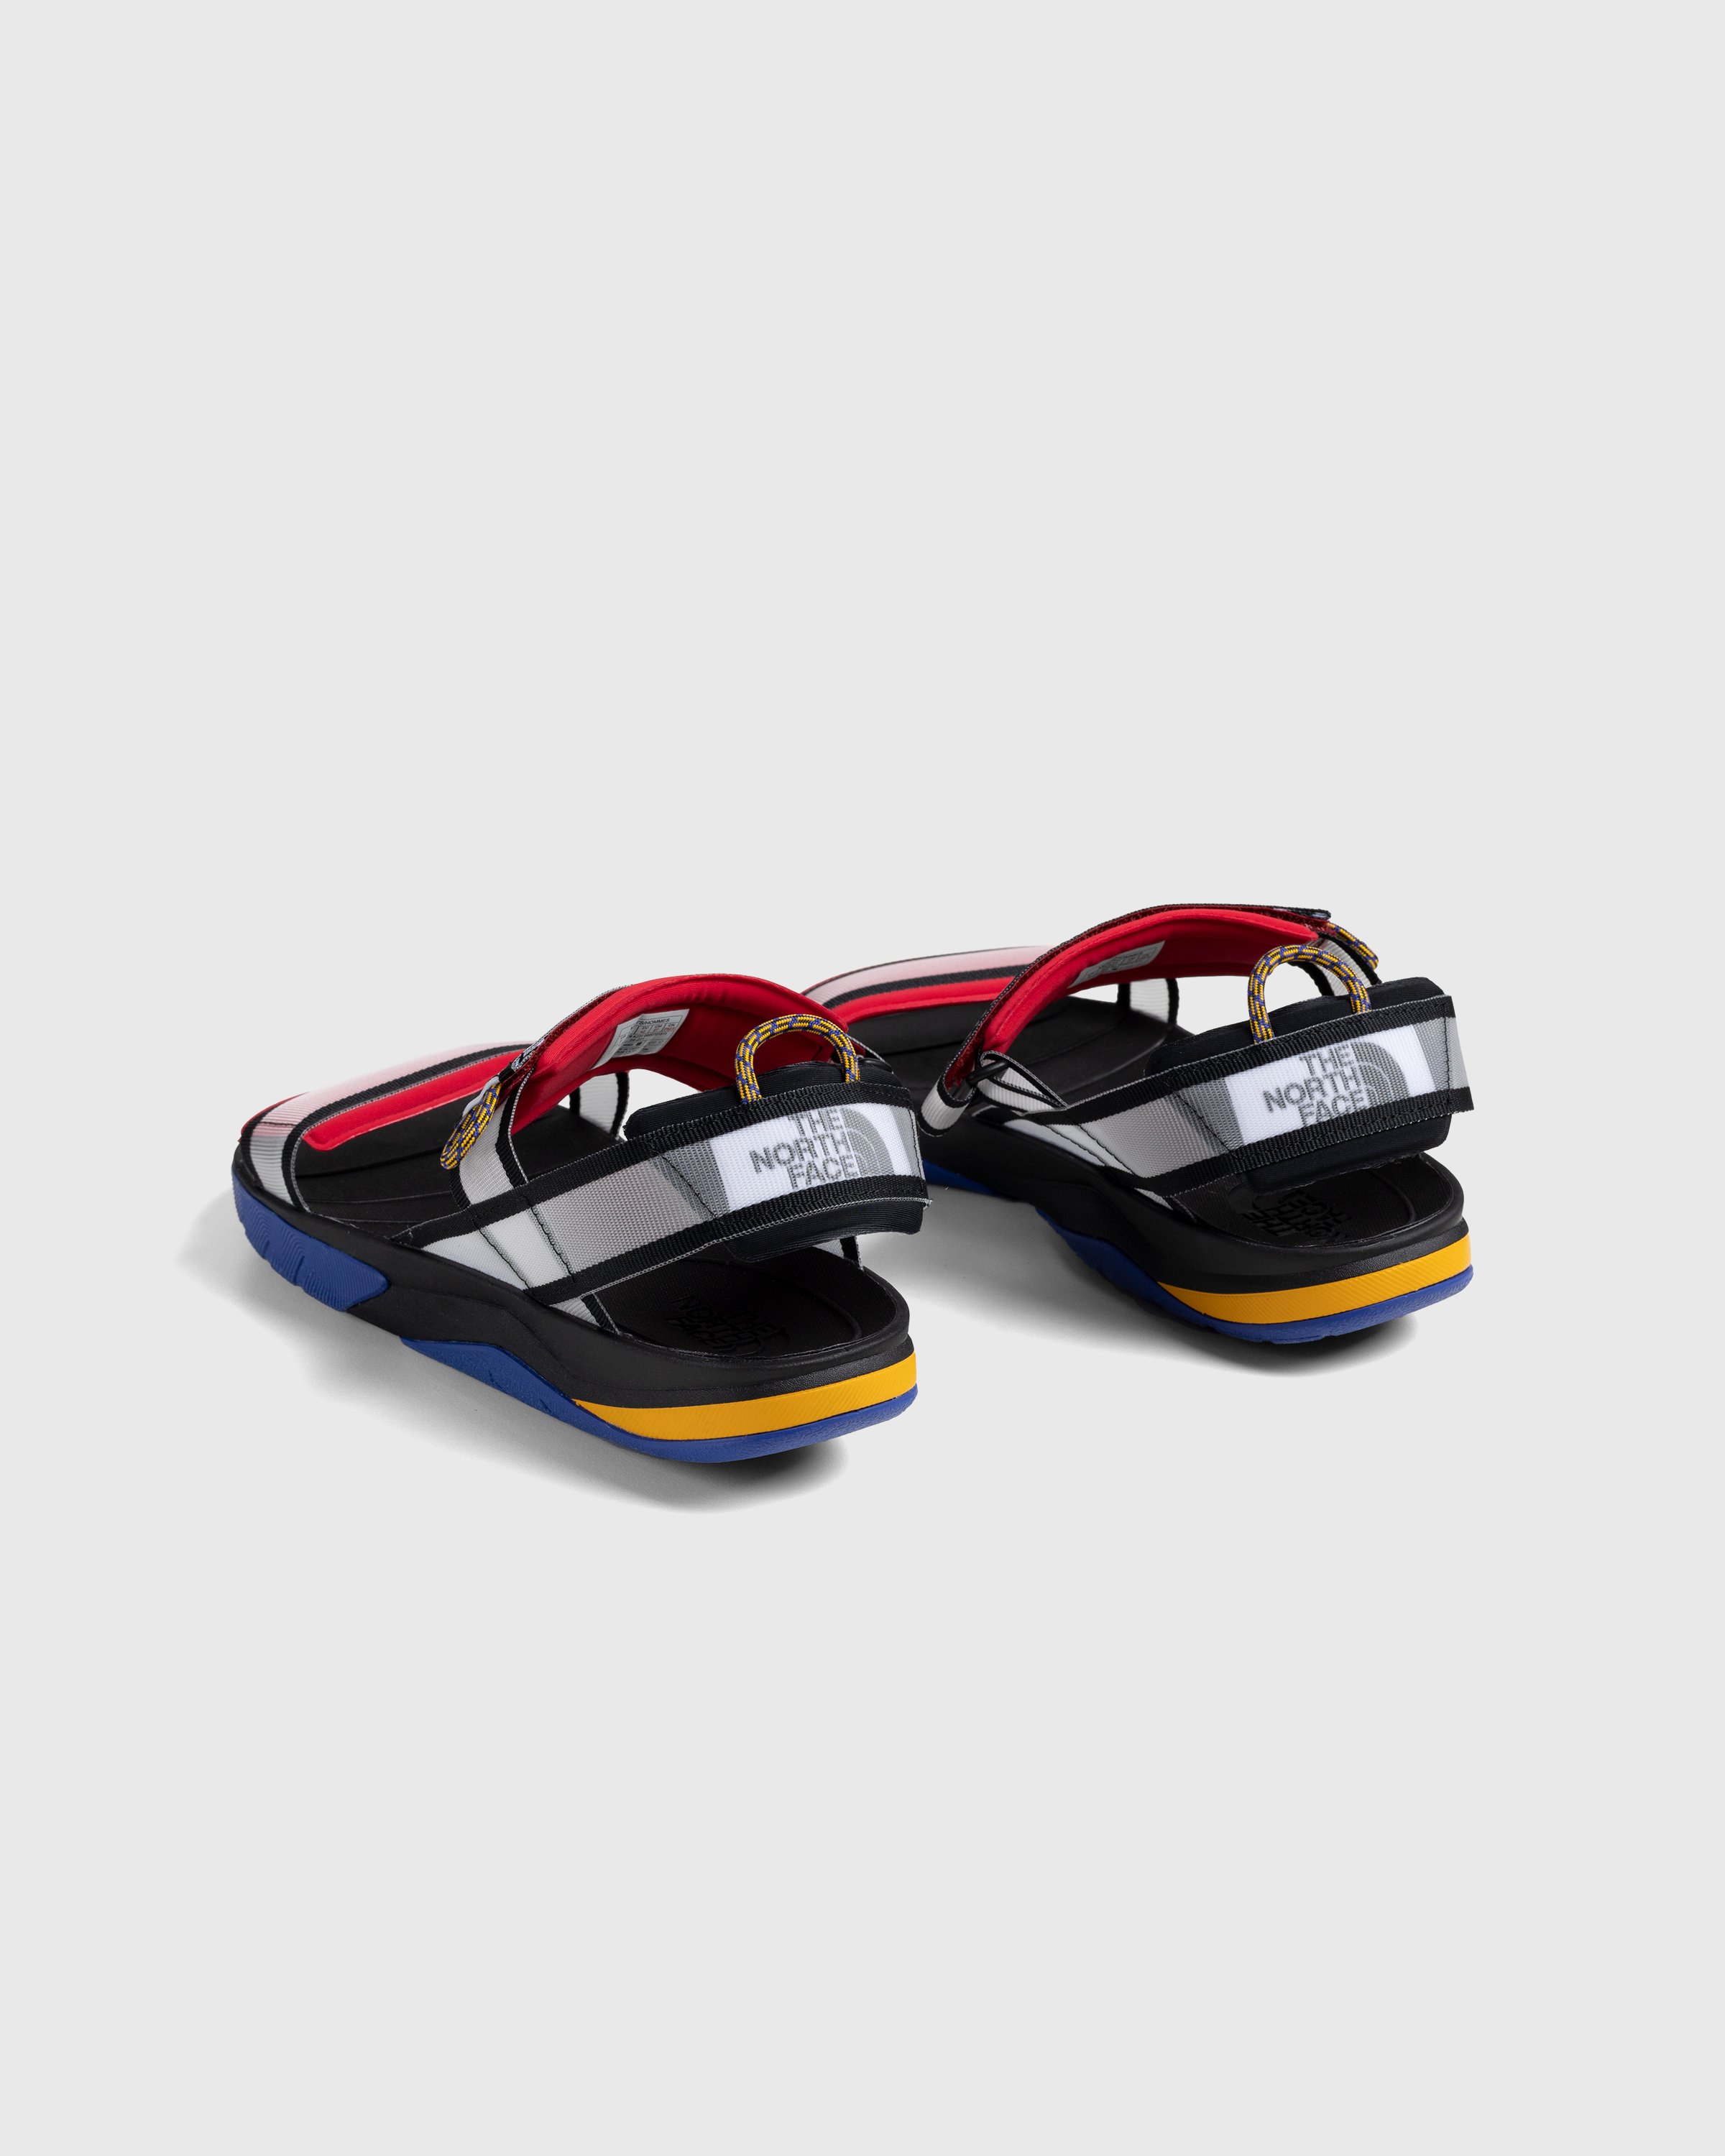 The North Face - Skeena Sport Sandal TNF Red/TNF Black - Footwear - Black - Image 4